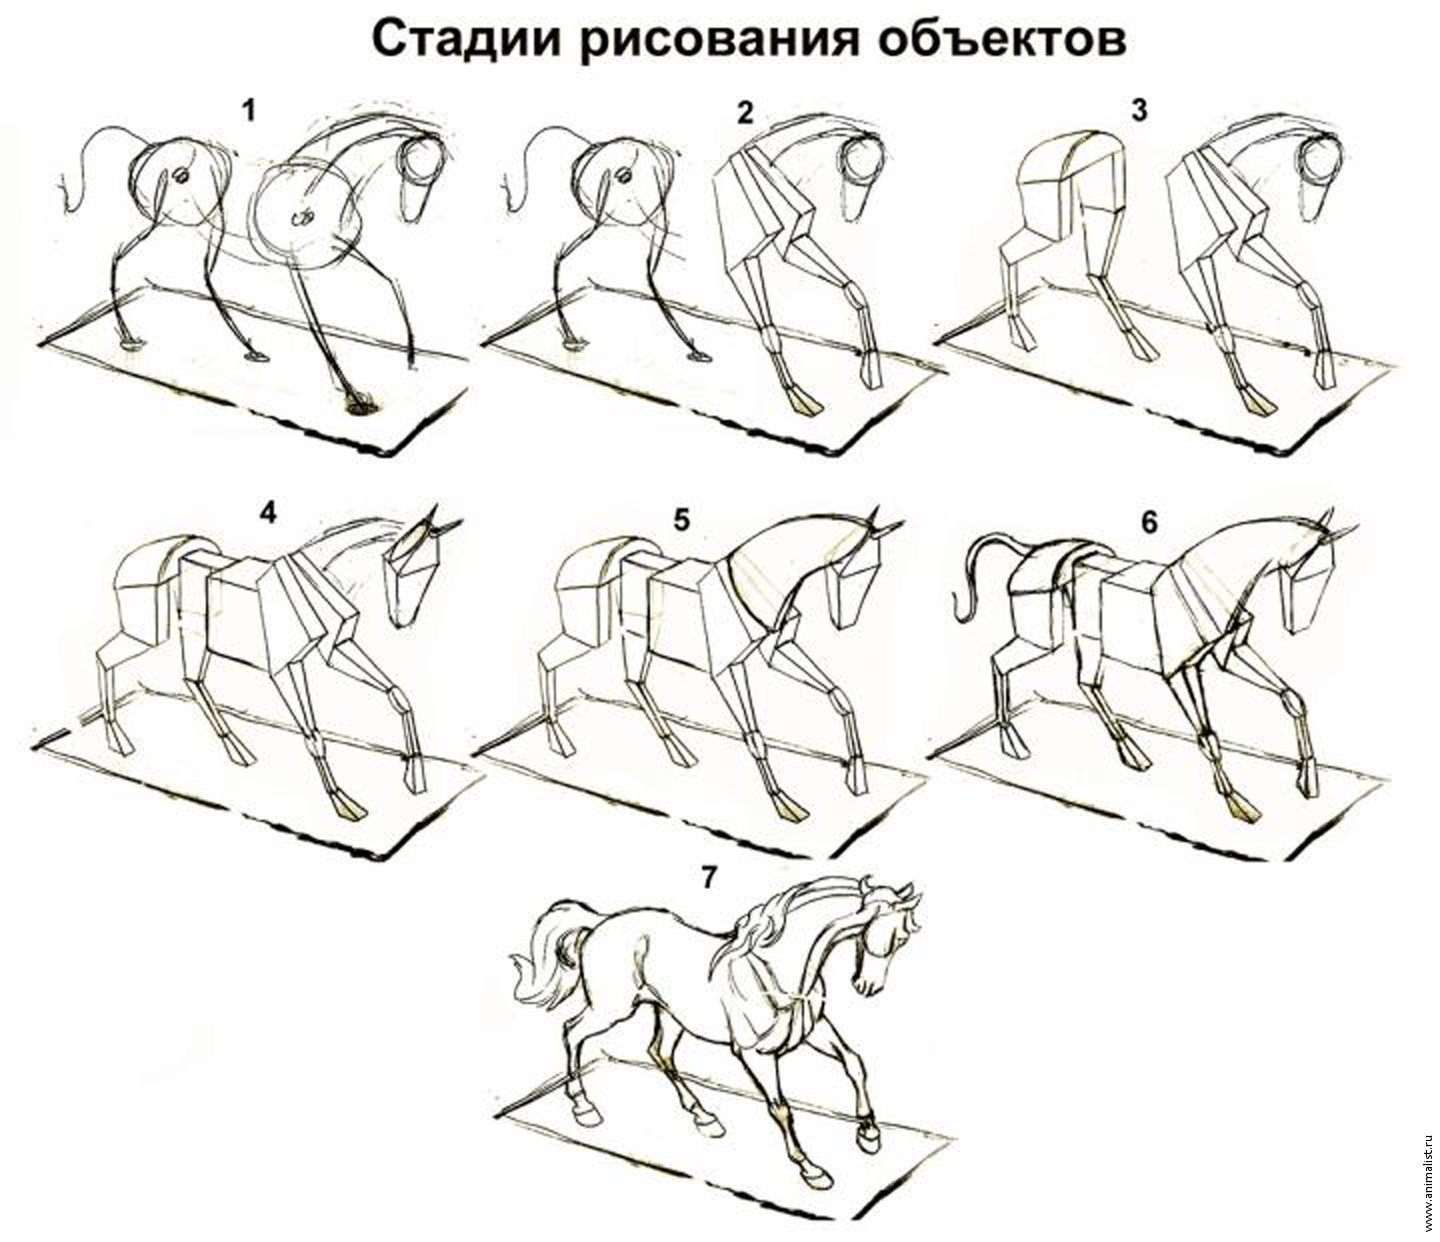 Движение лошади рисунок схема